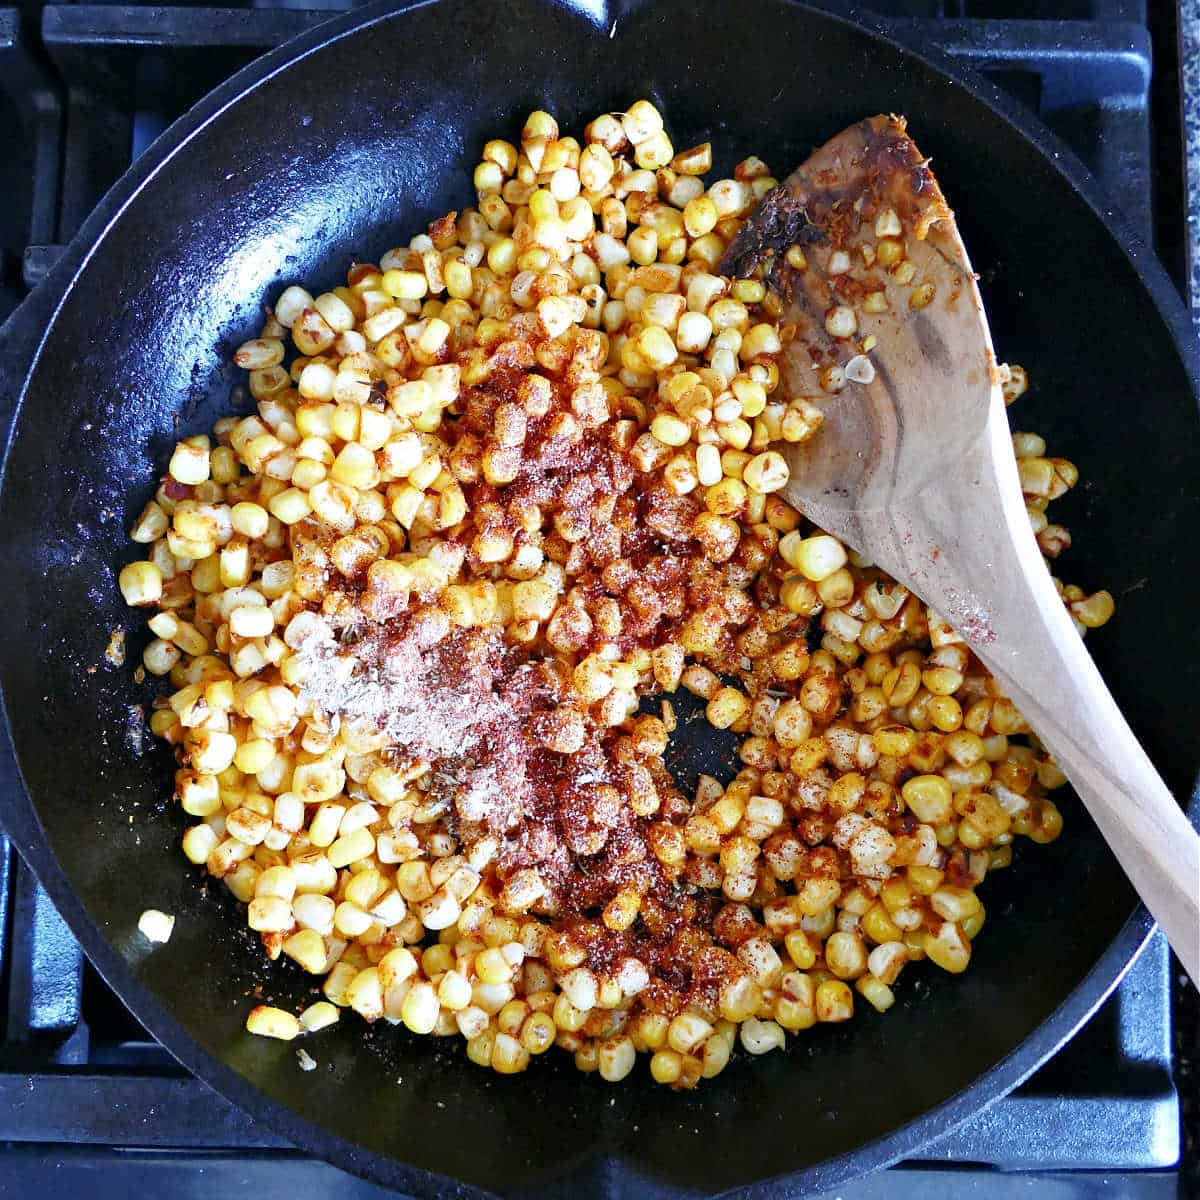 sweet corn with added blackened seasonings cooking in a skillet